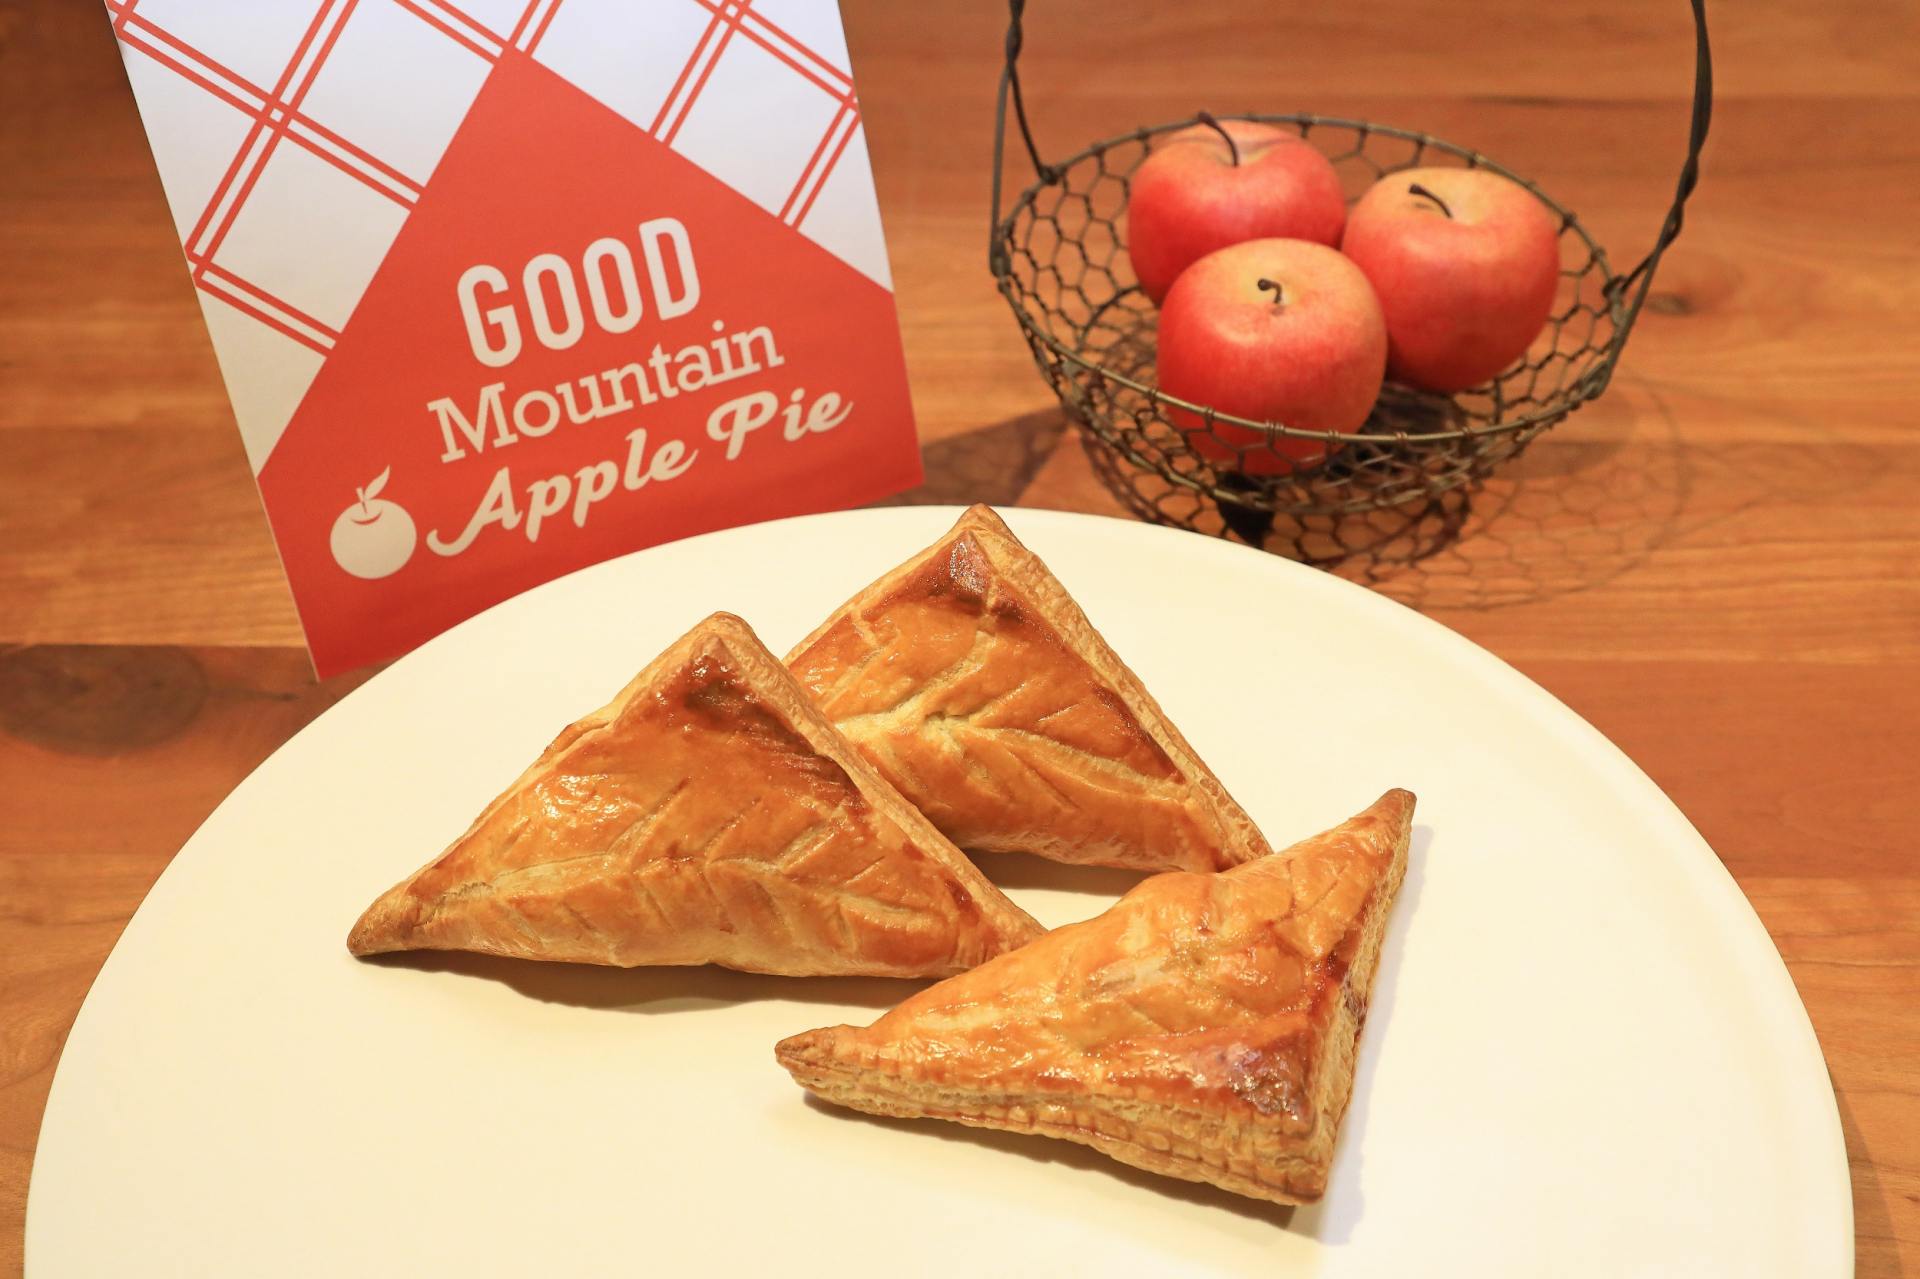 GOOD Mountain Apple Pie